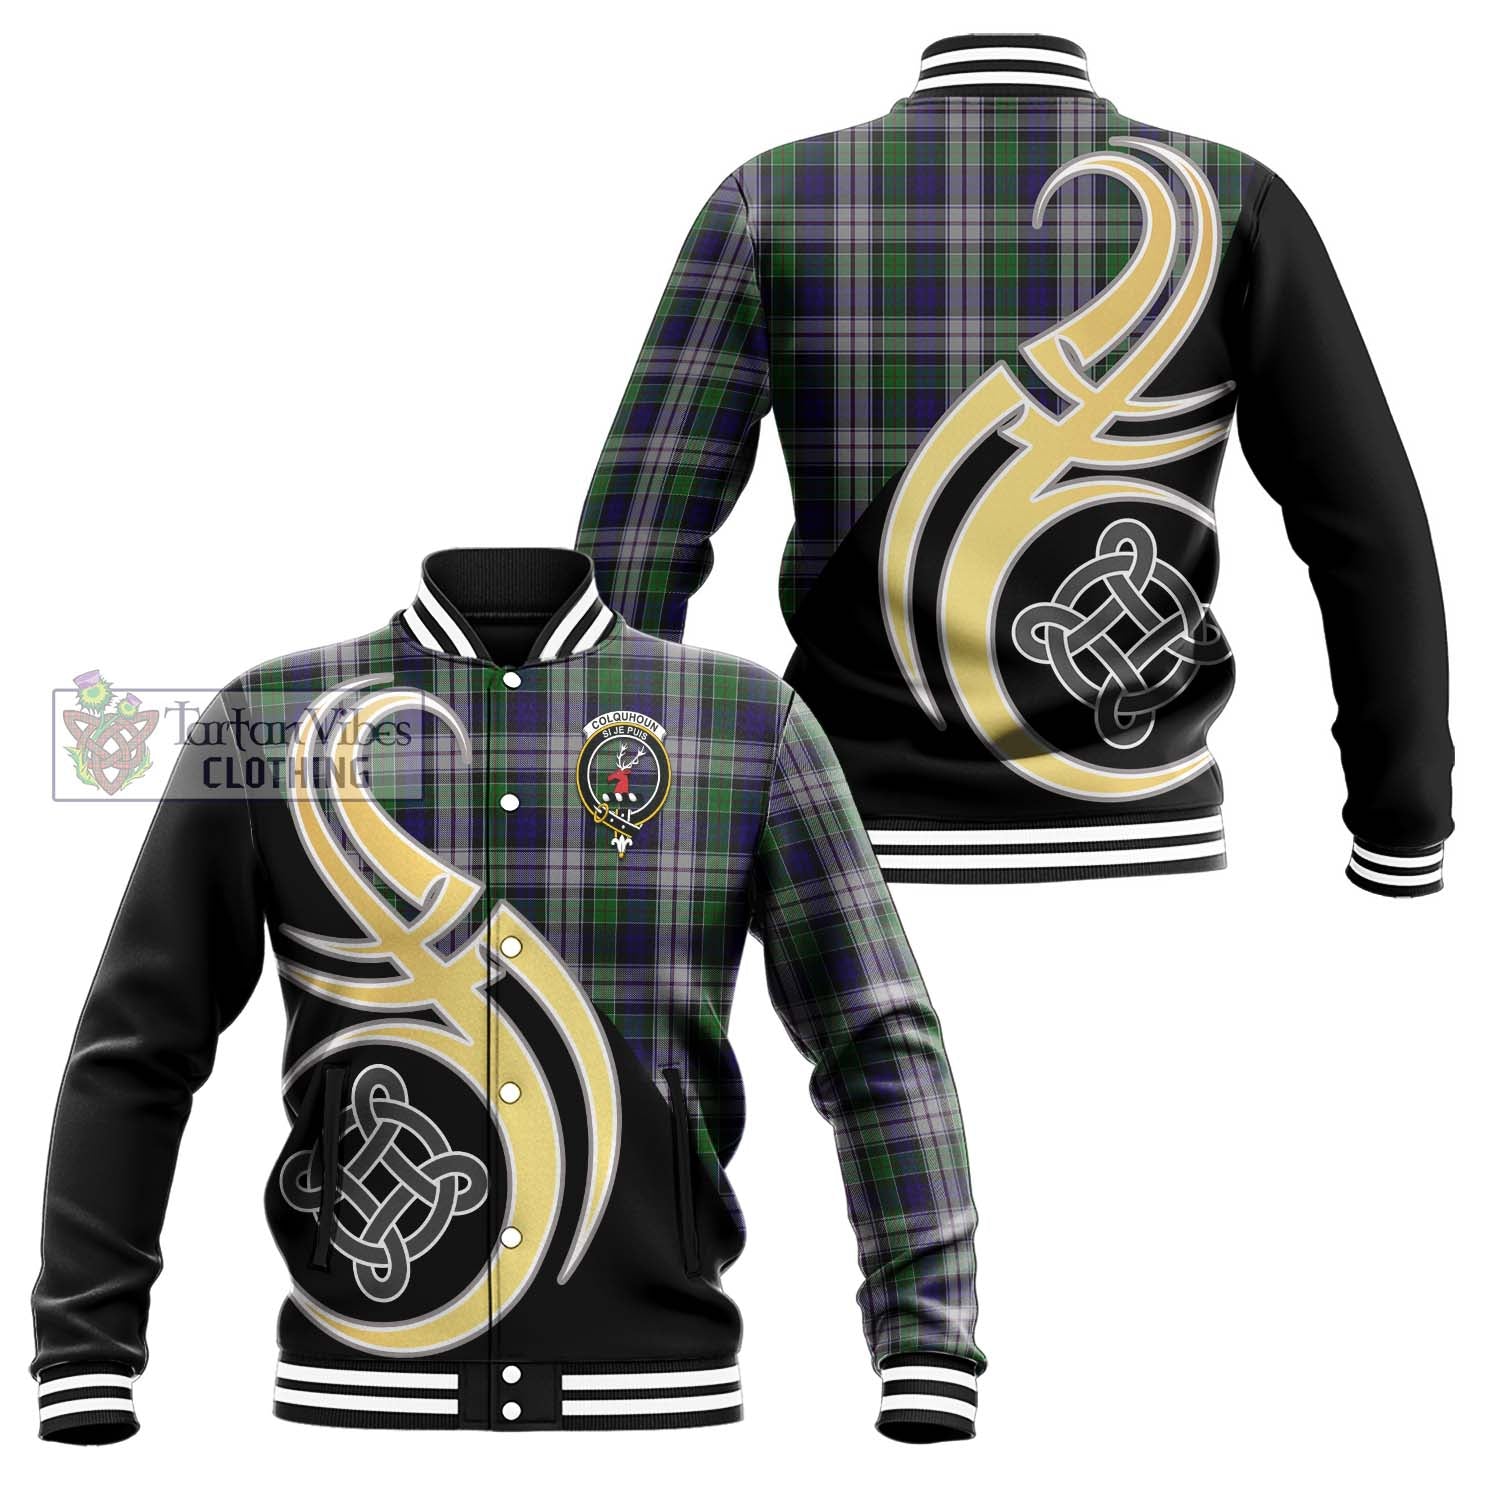 Tartan Vibes Clothing Colquhoun Dress Tartan Baseball Jacket with Family Crest and Celtic Symbol Style